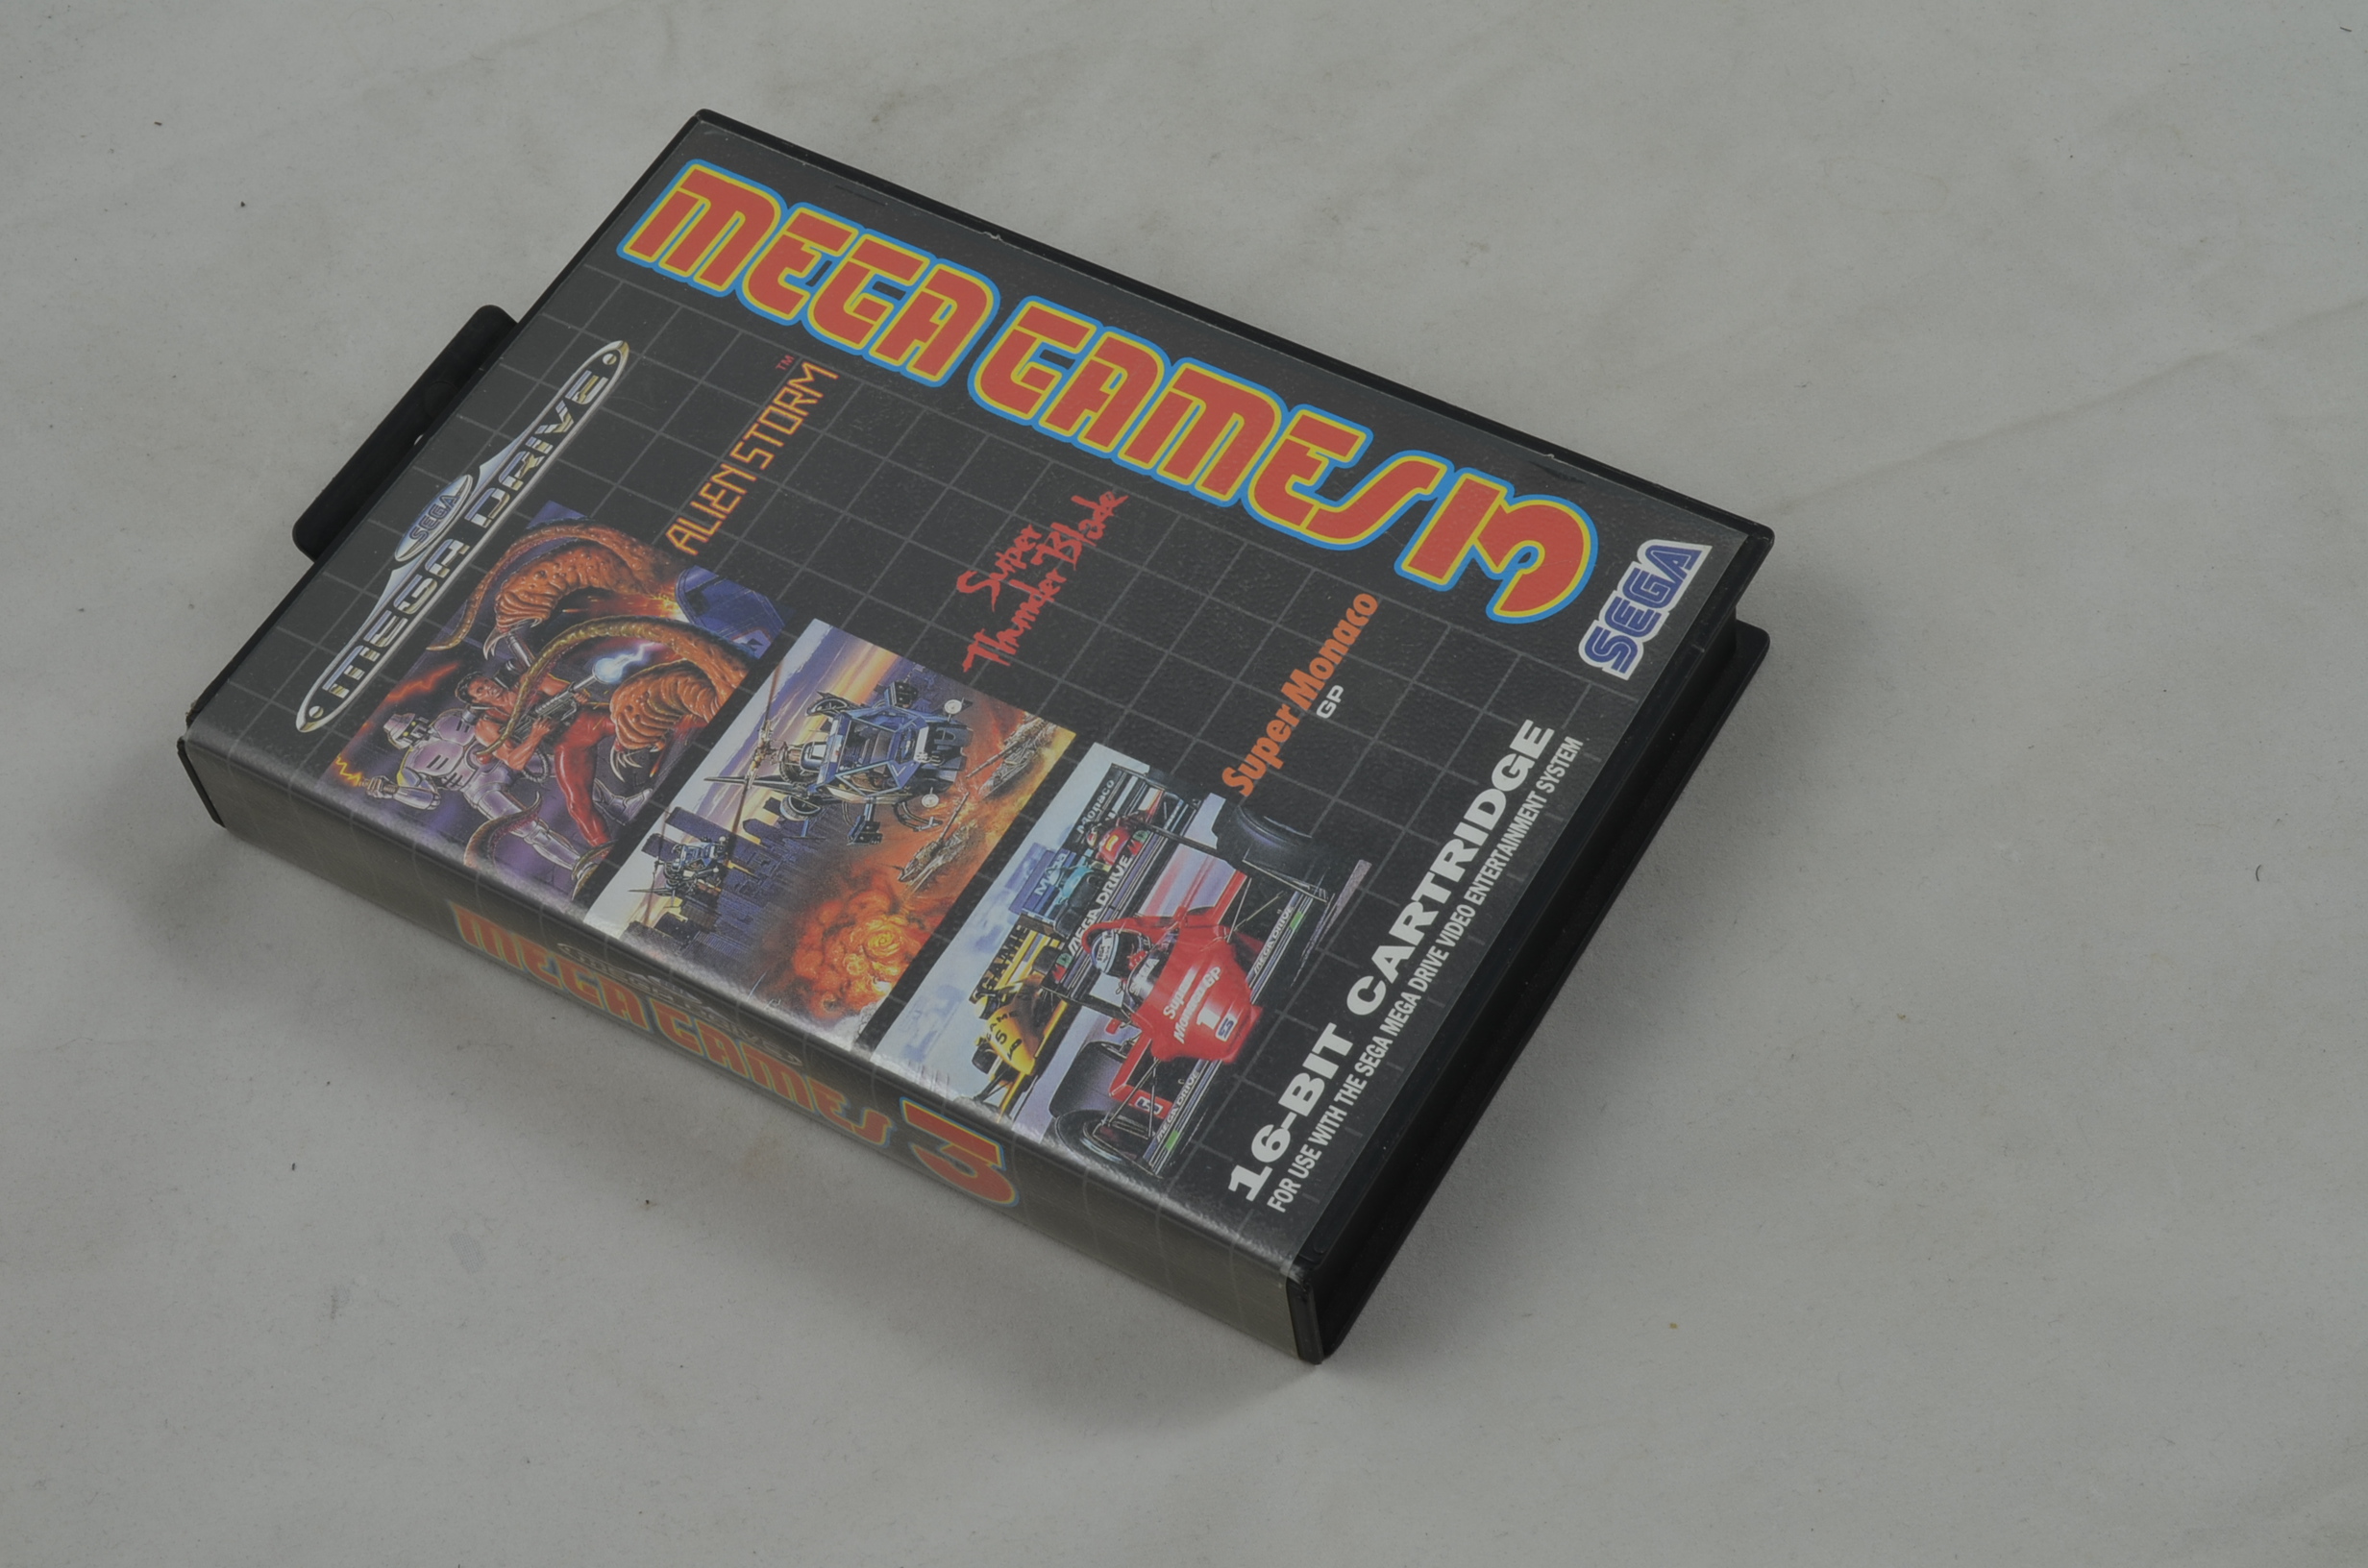 Produktbild von Mega Games 3 Sega Mega Drive Spiel CIB (gut)